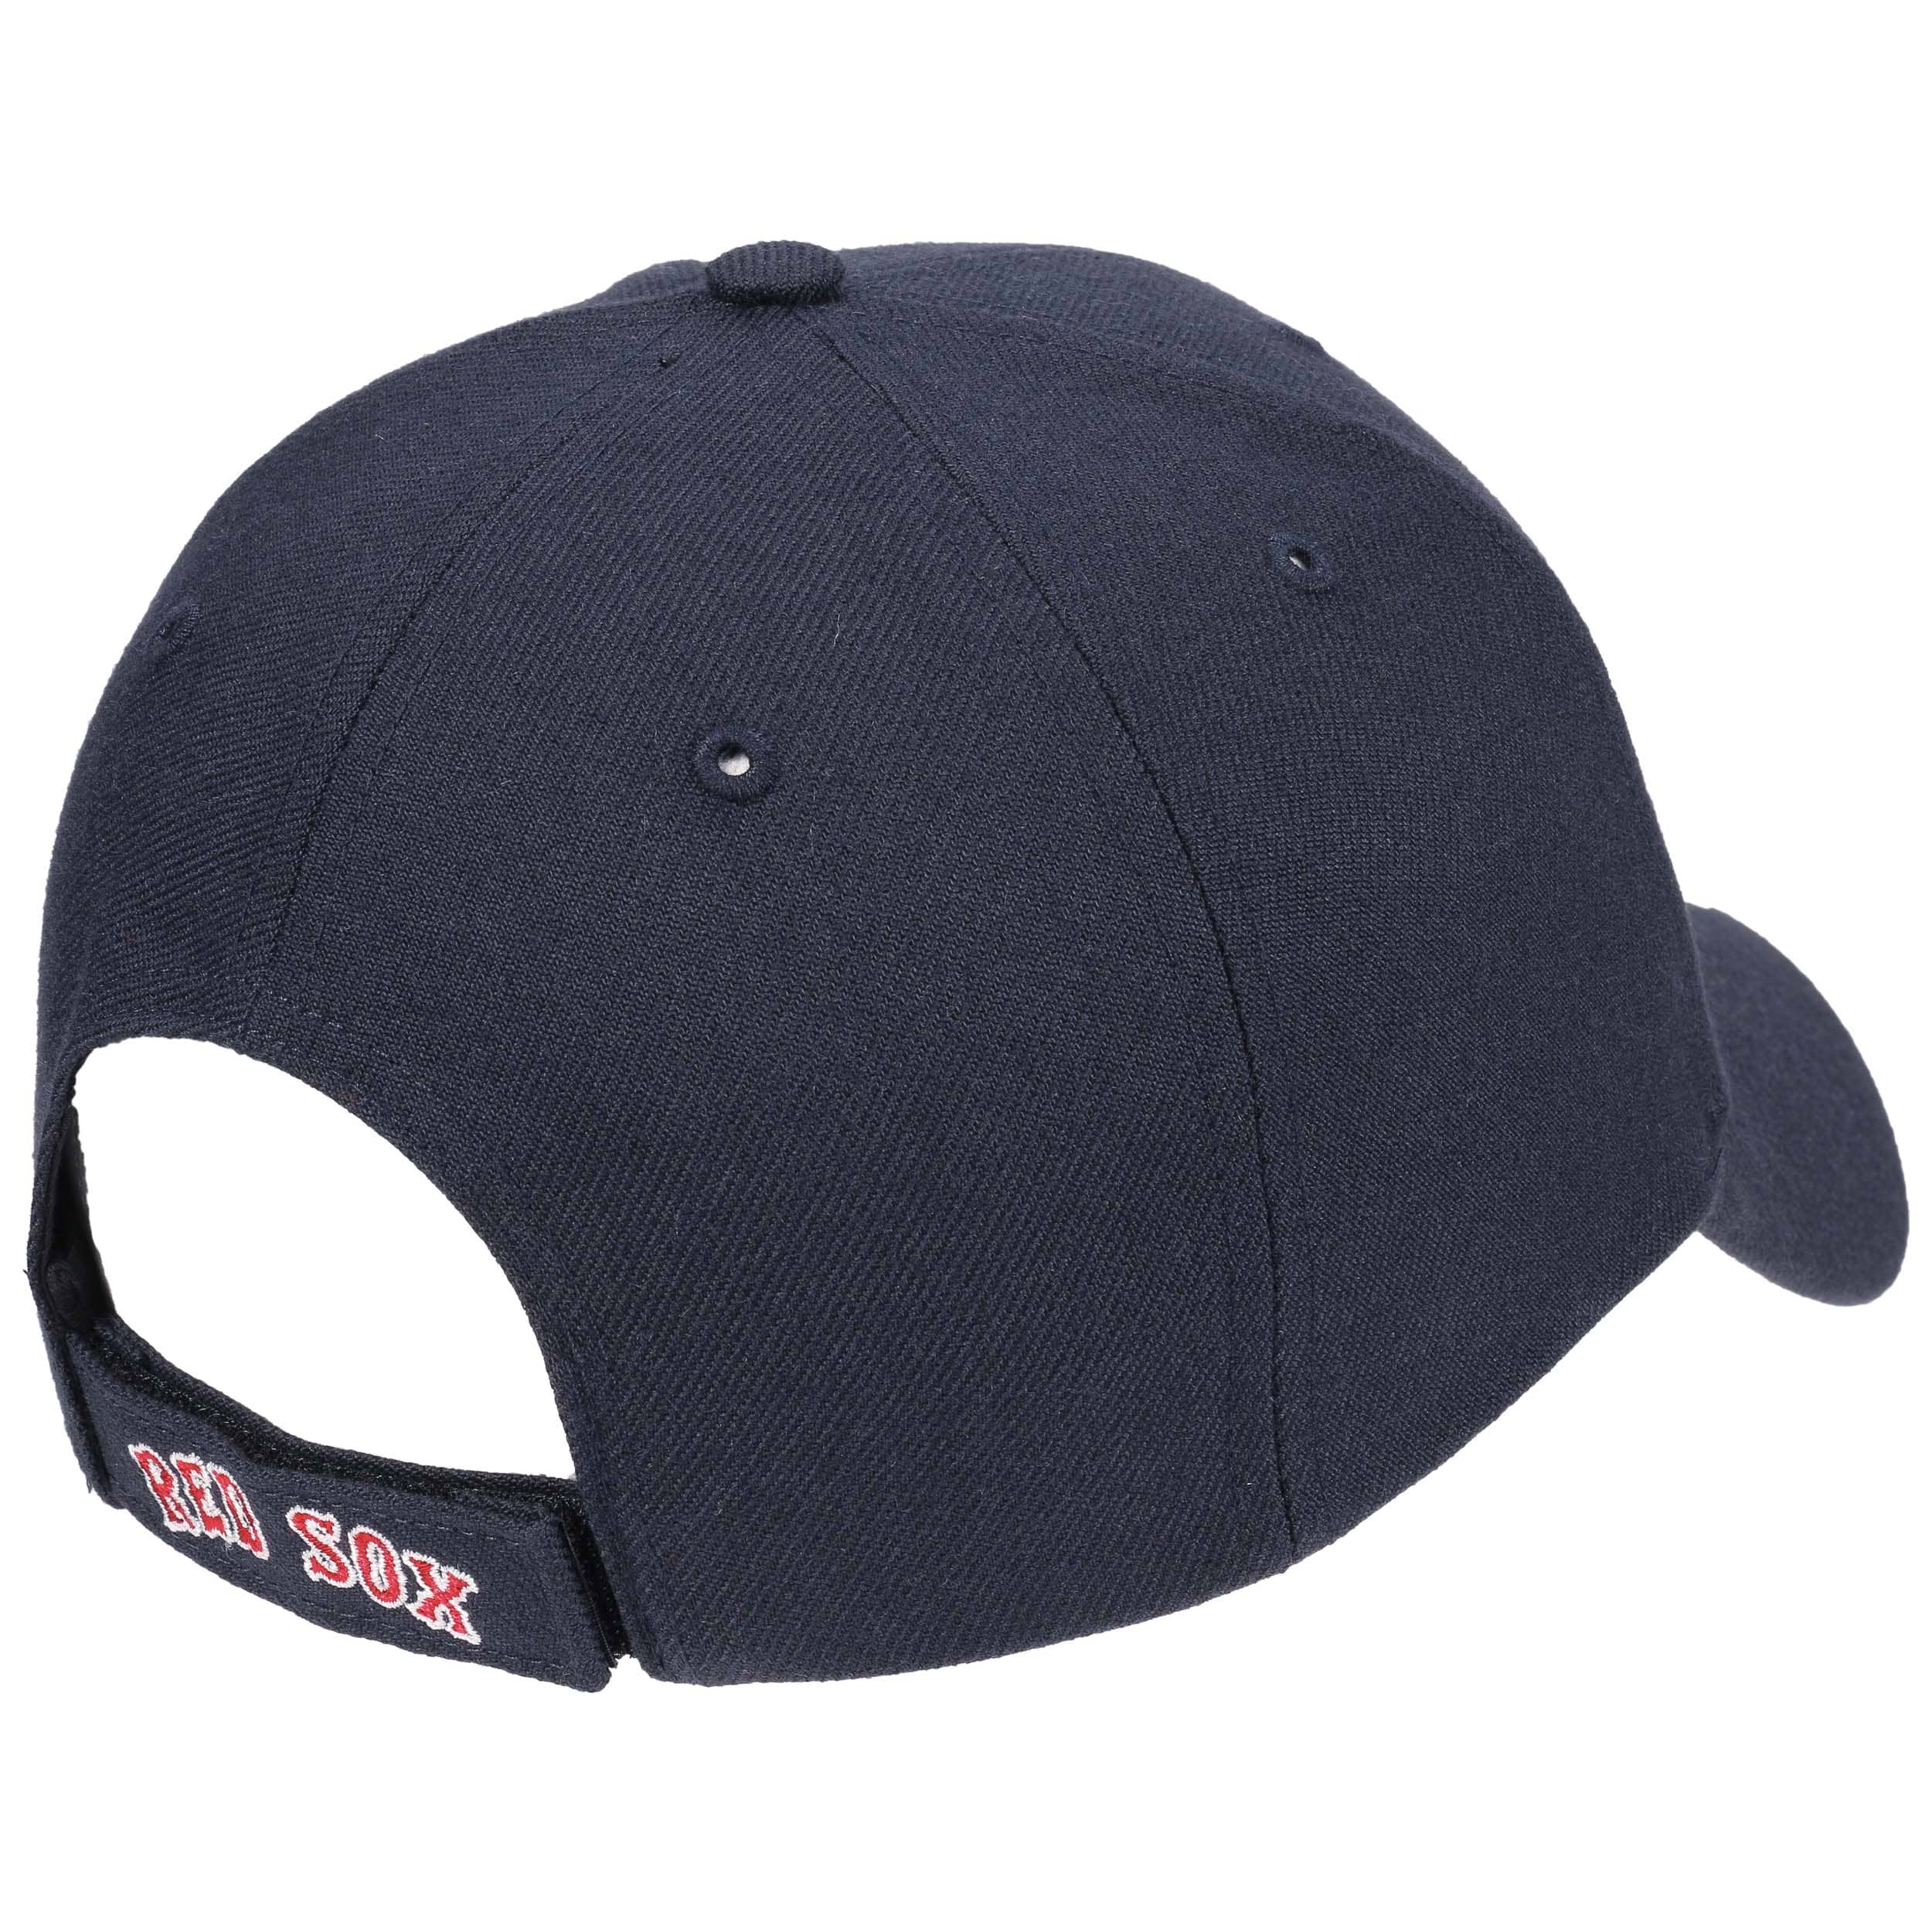 Boston Red Sox Strapback Cap by 47 Brand